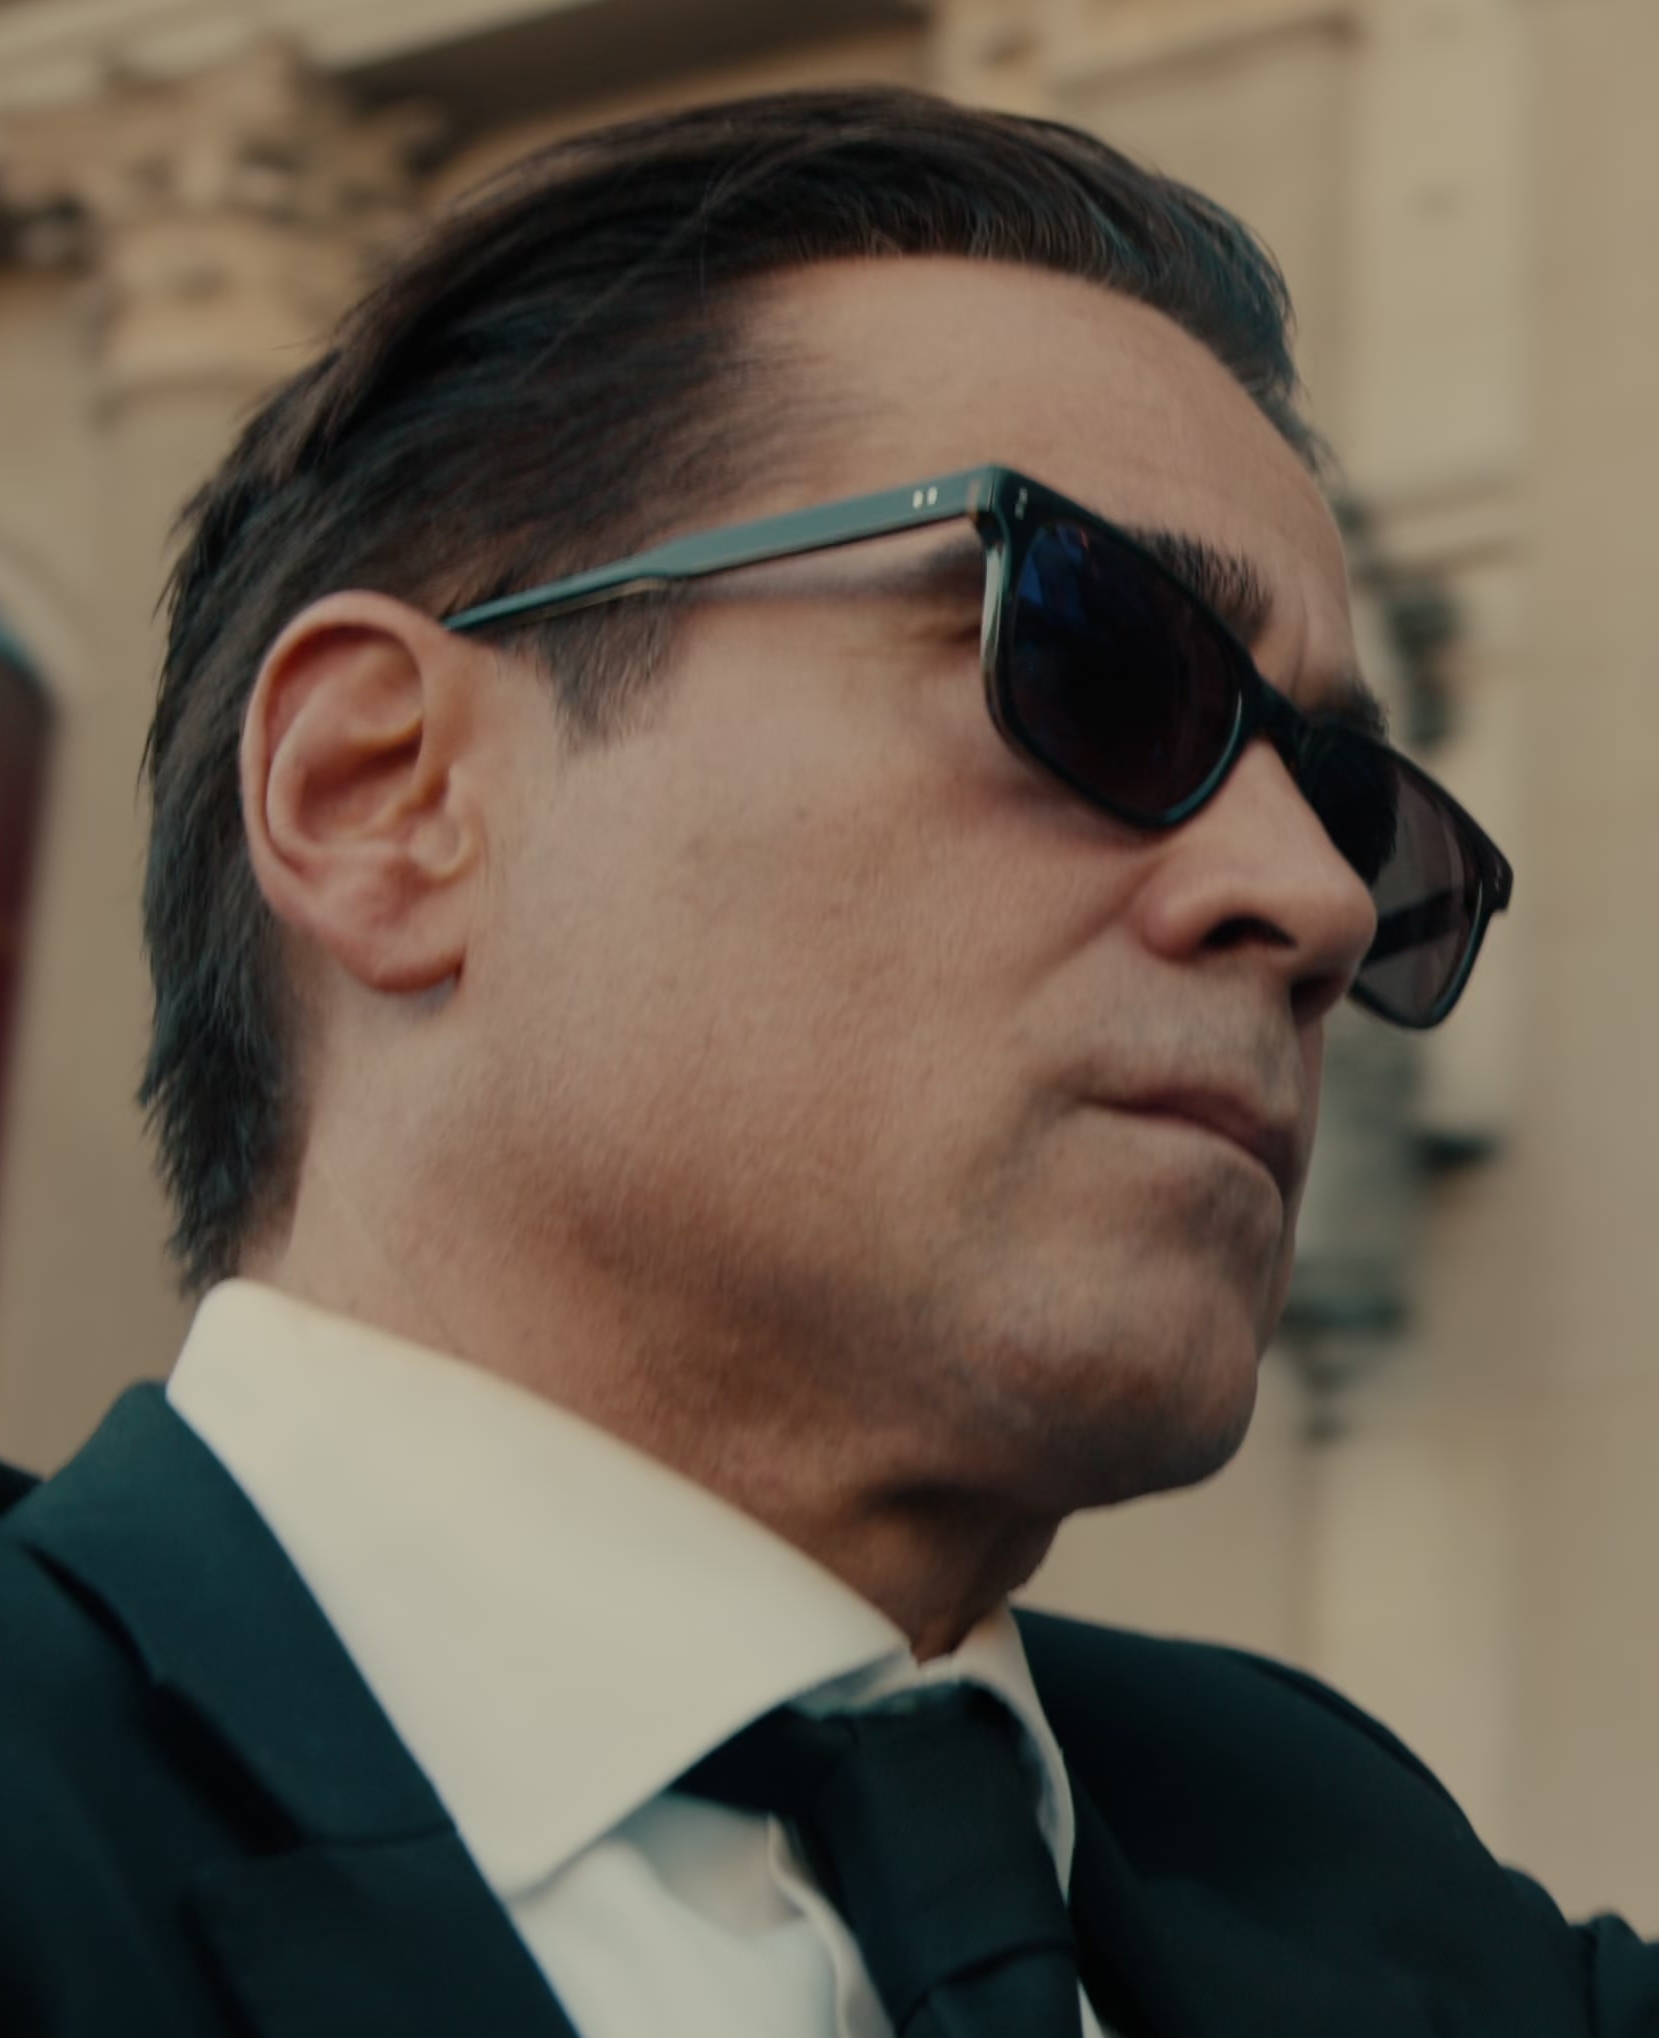 Black Wayfarer Sunglasses of Colin Farrell as John Sugar